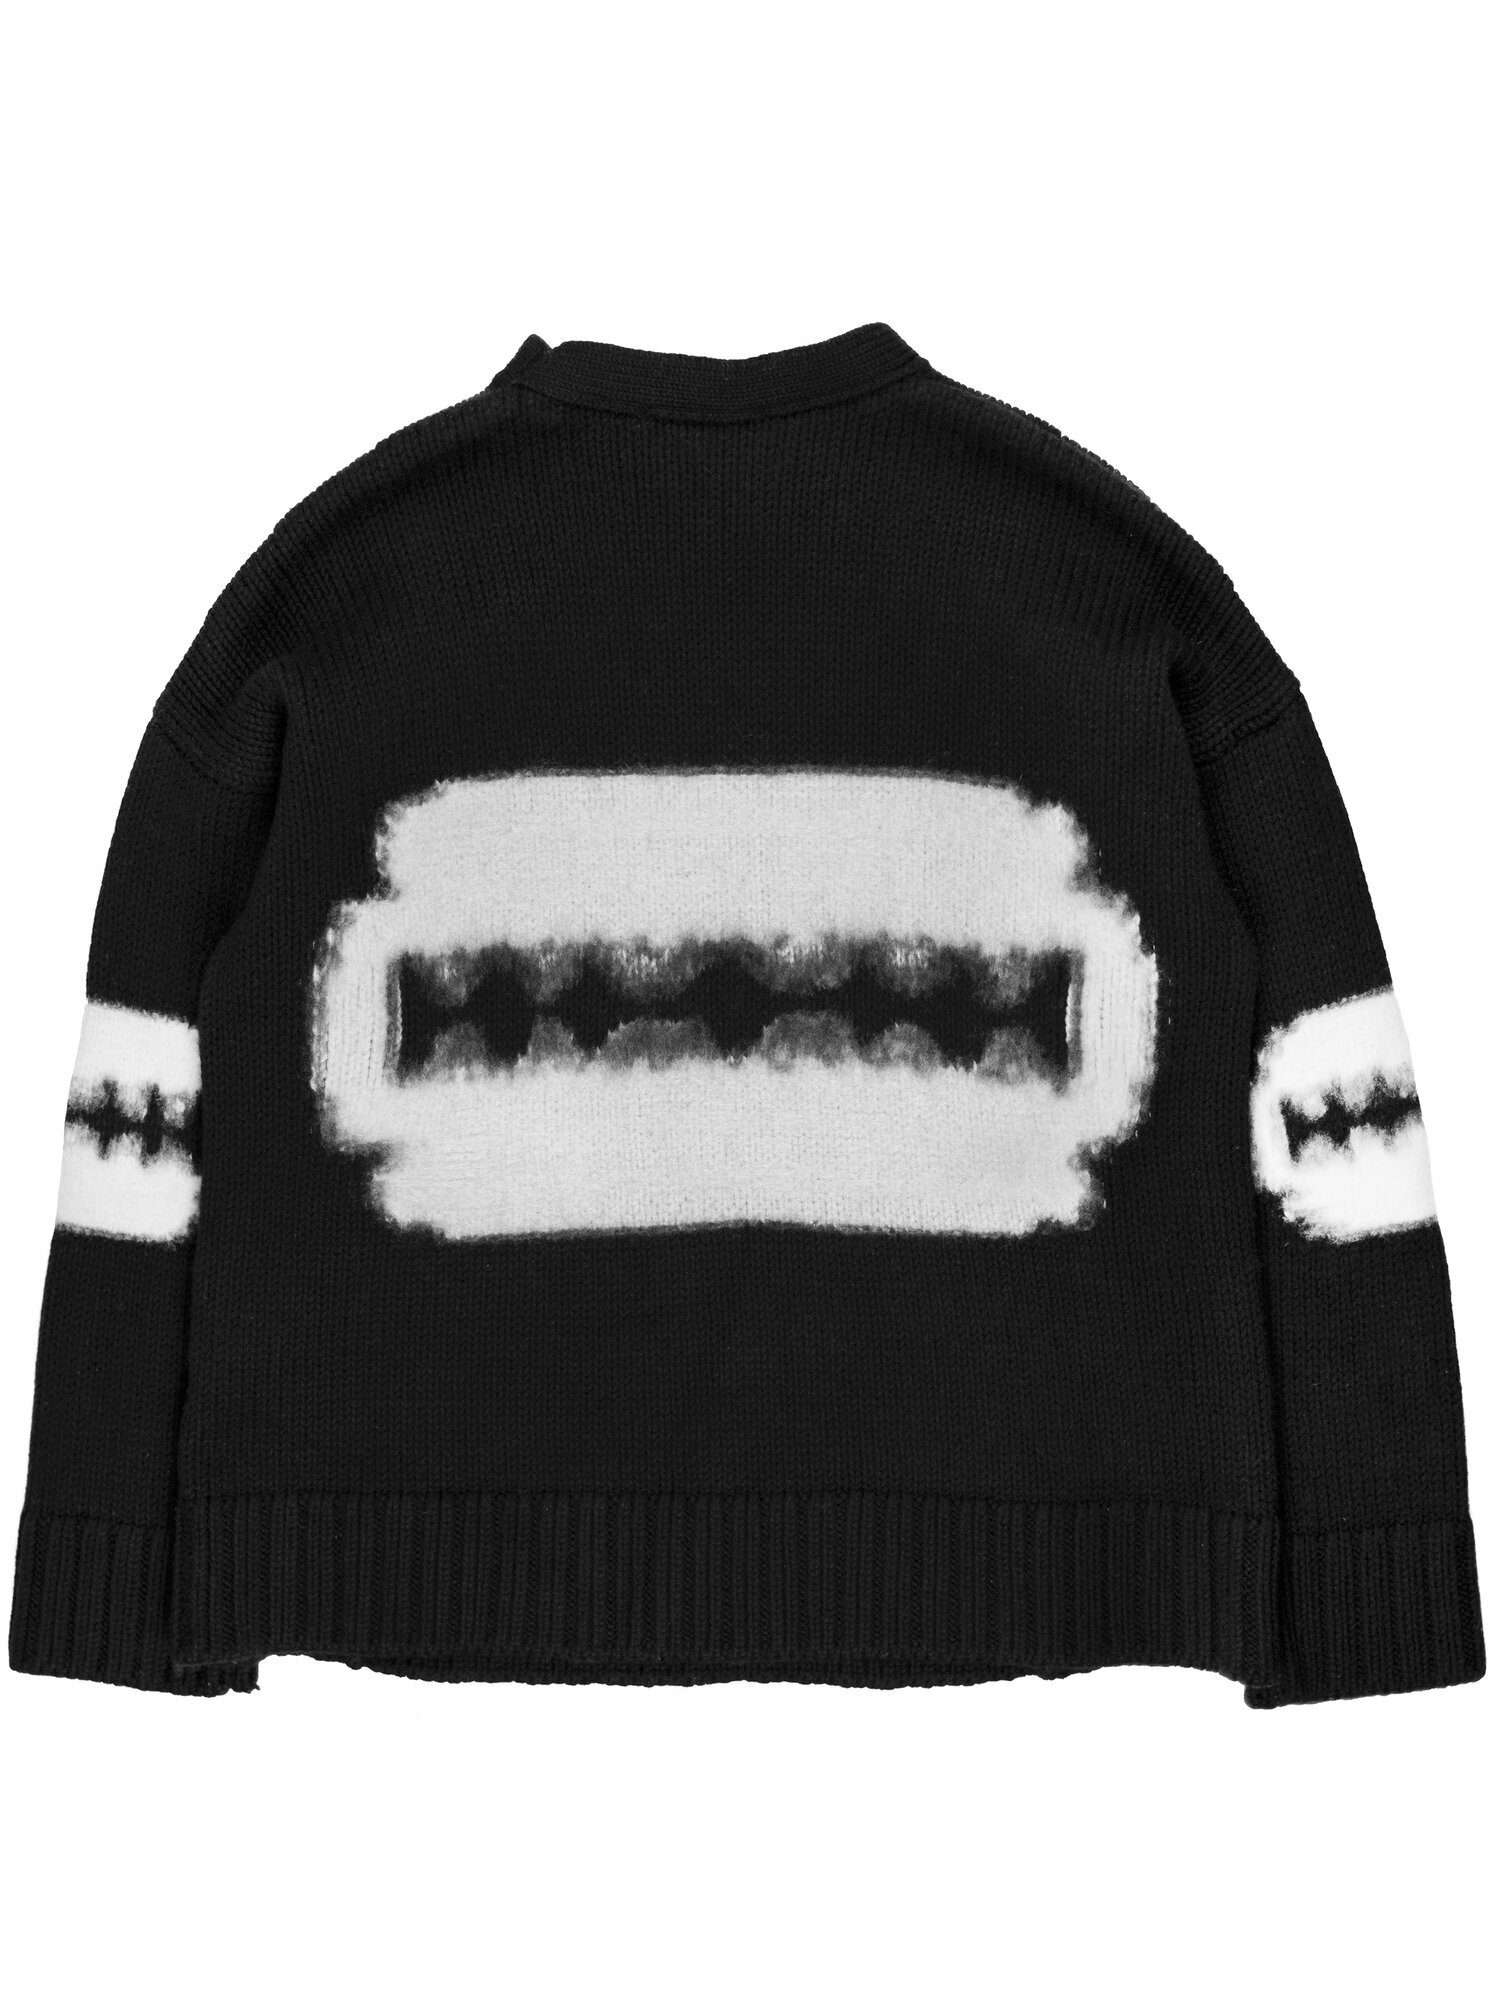 Yves Saint Laurent AW2012 Razor Blade Sweater — Middleman Store